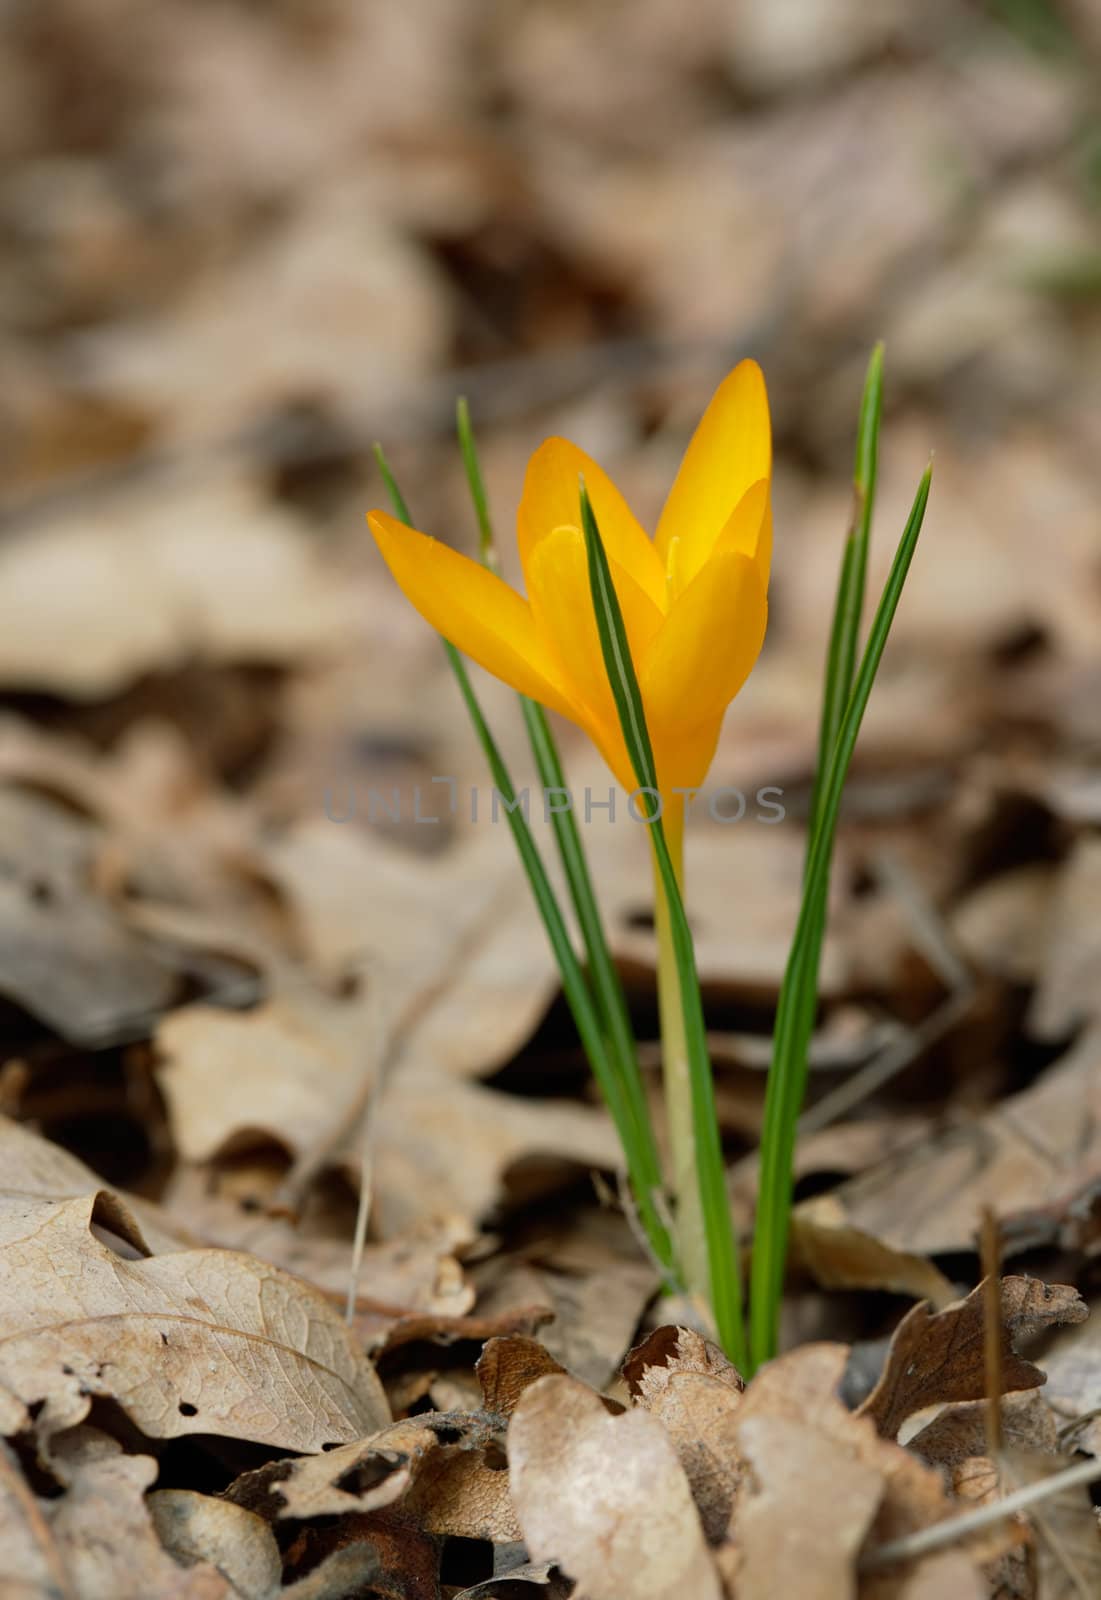 Spring flower - a crocus